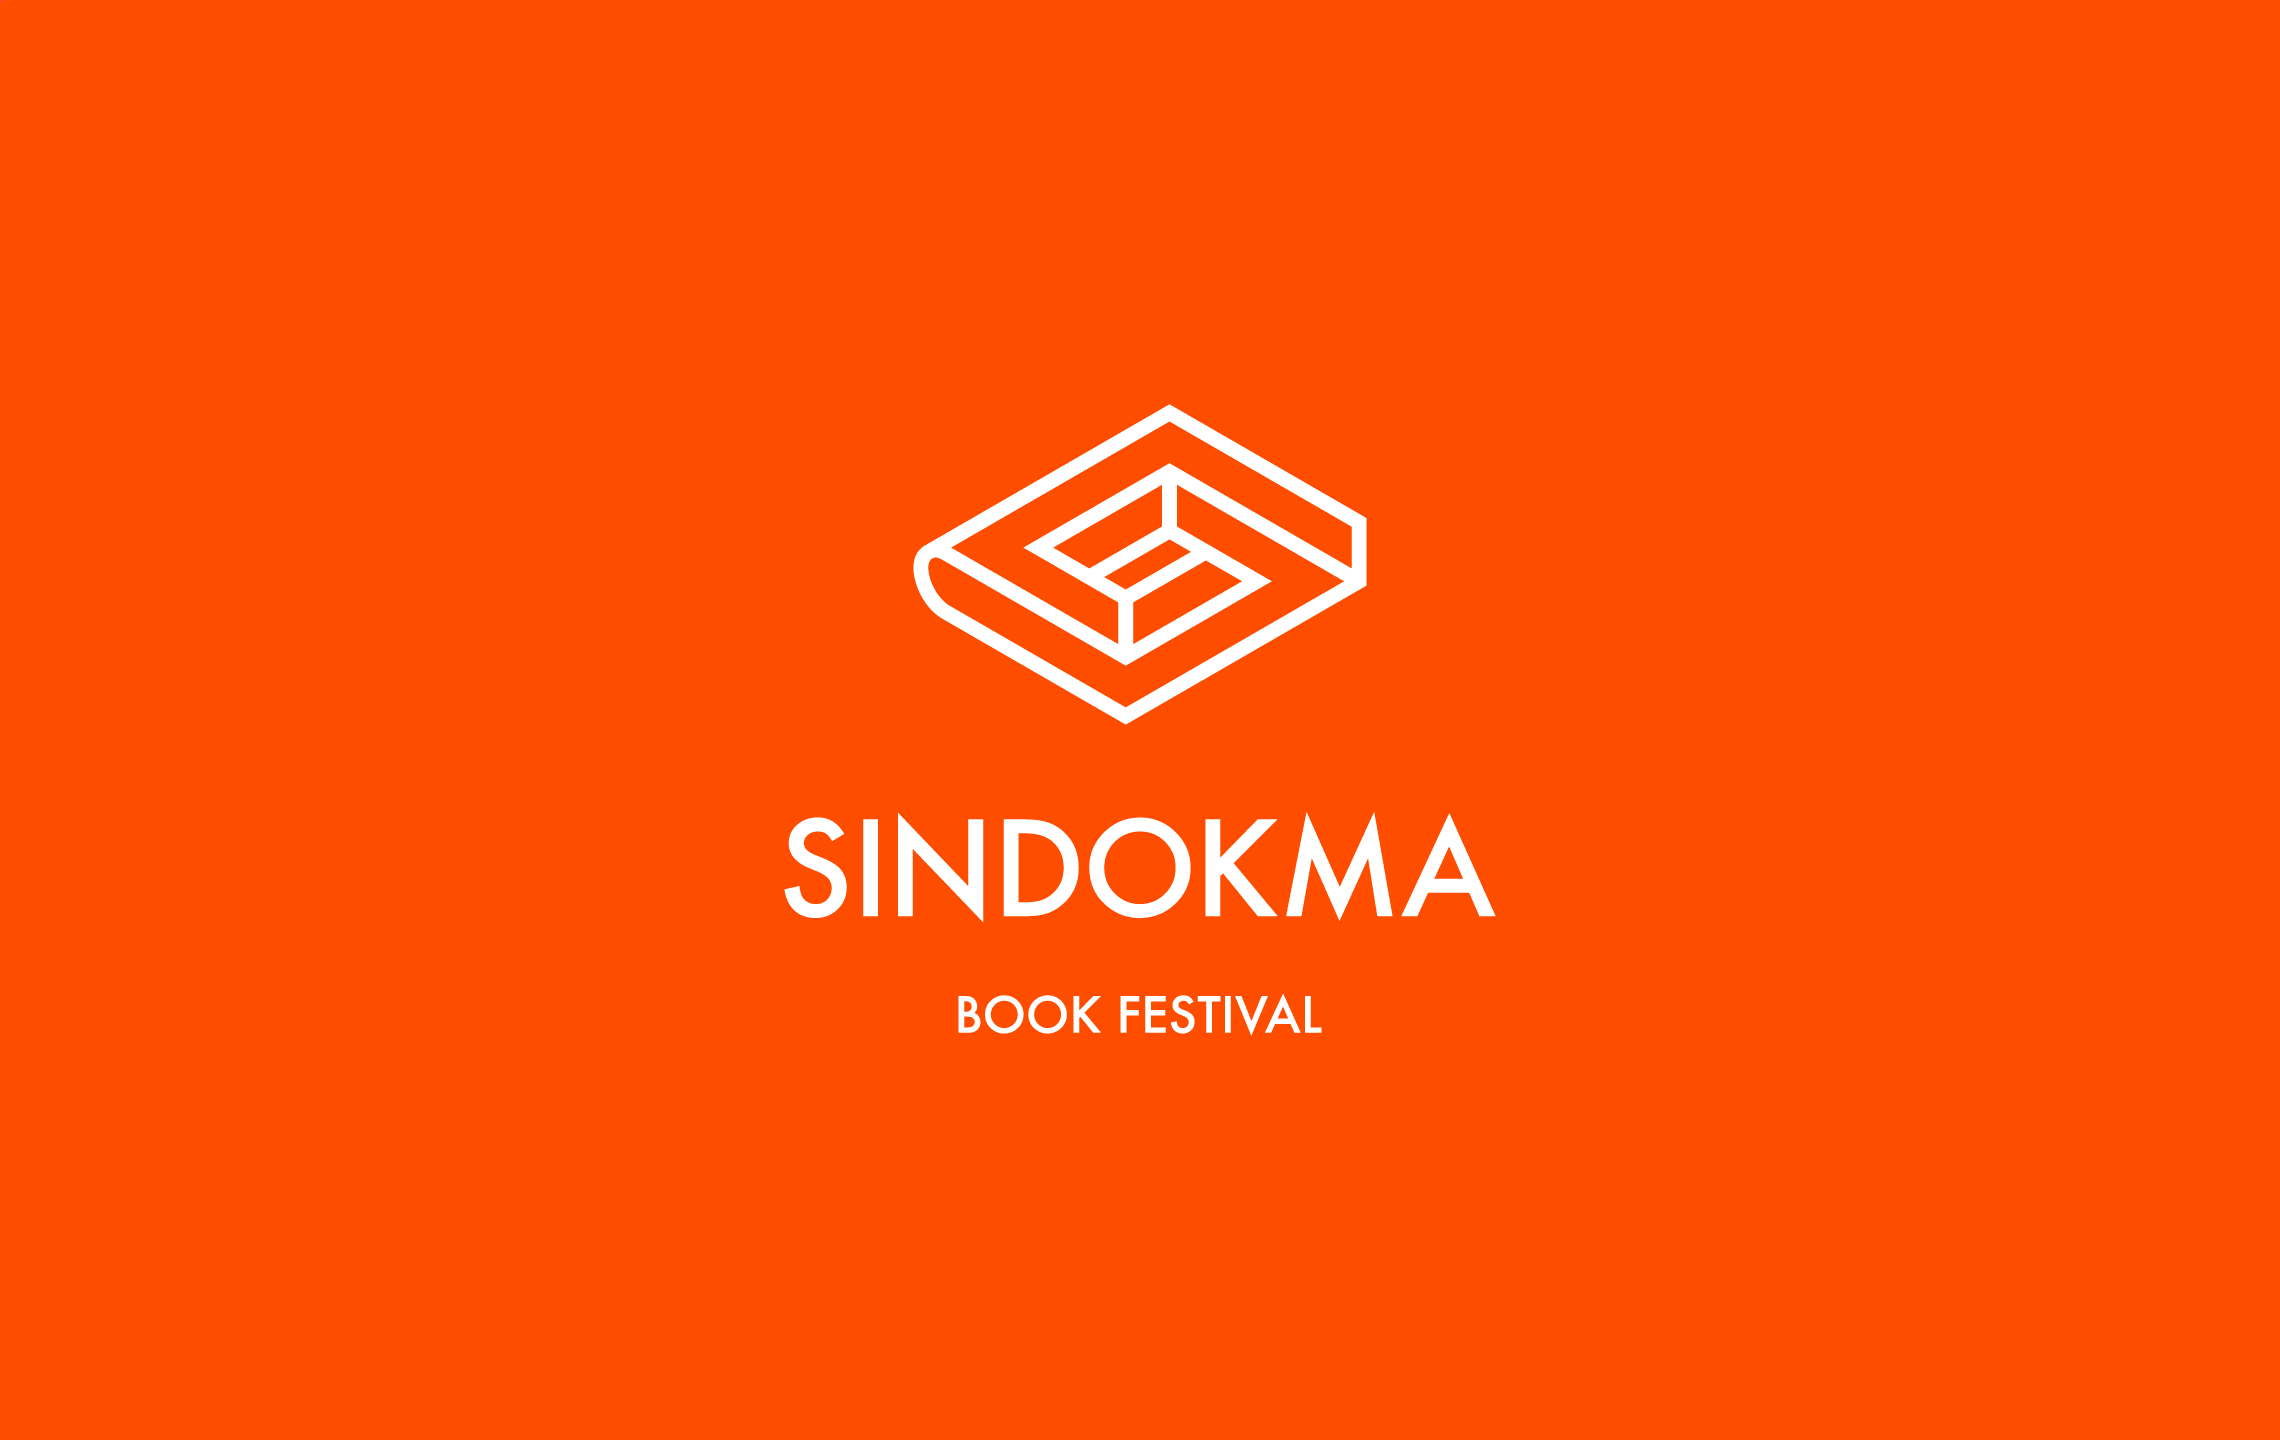 Logo for the book festival Sindokma